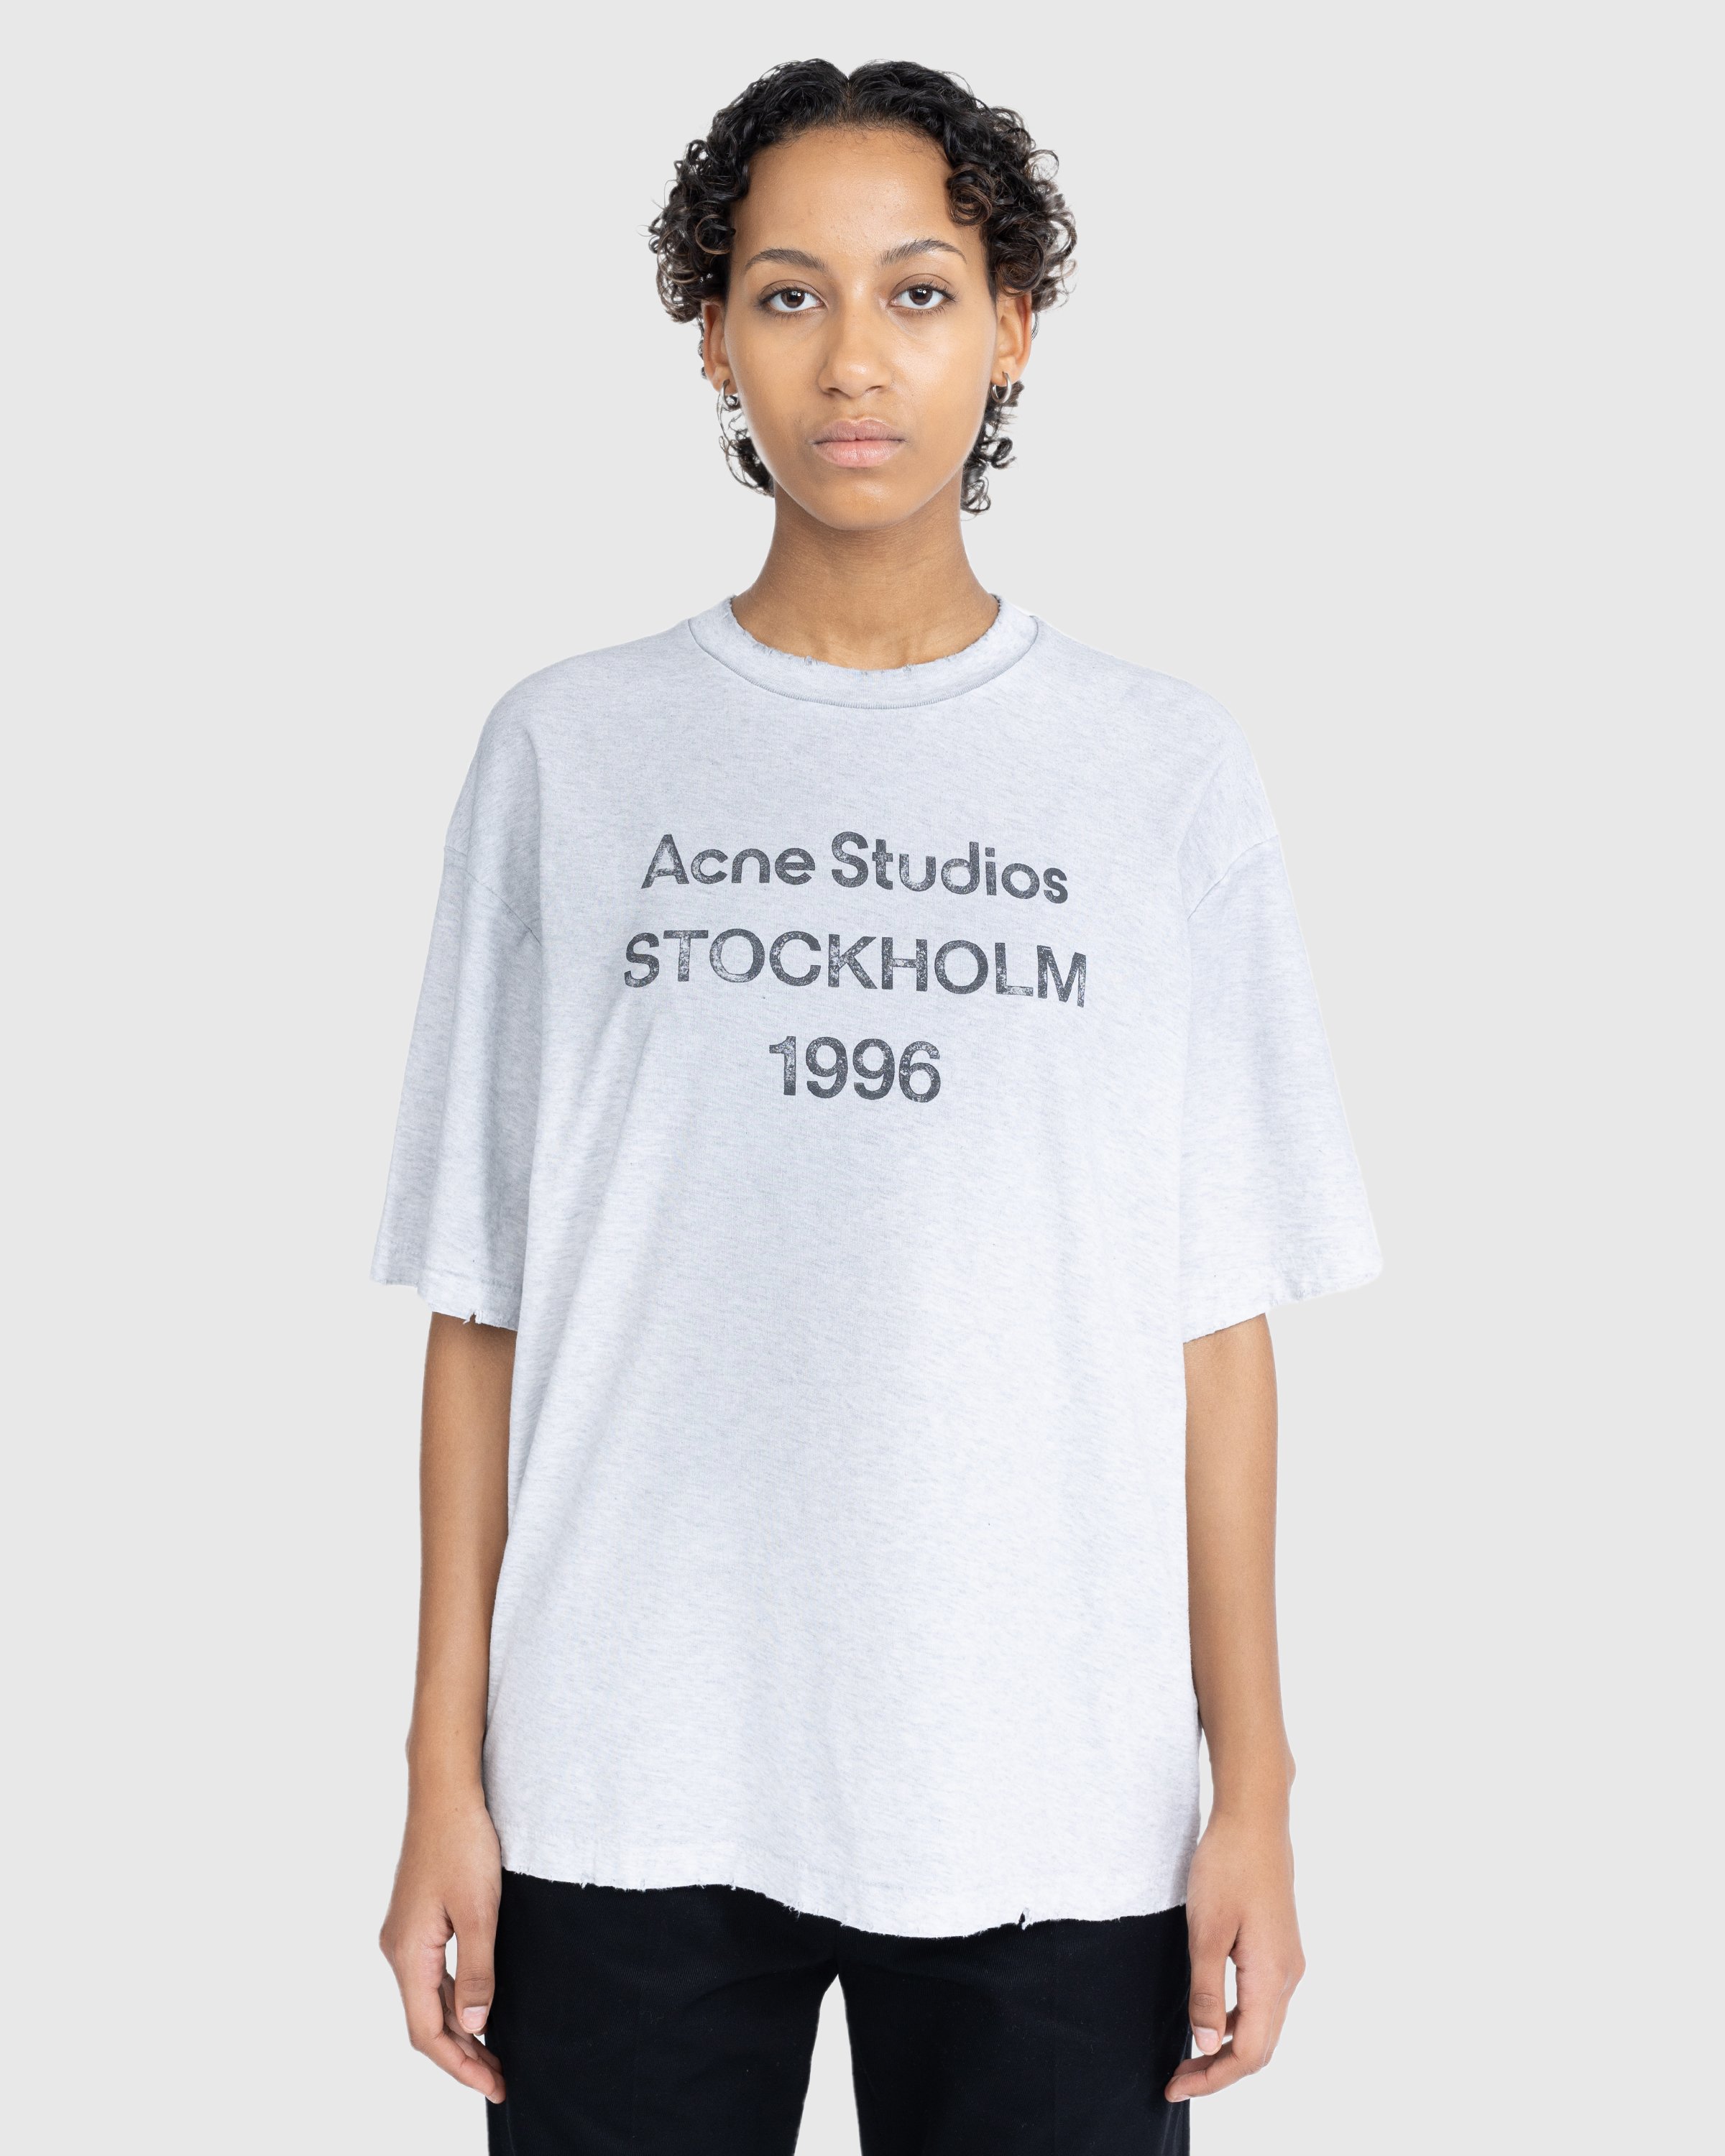 Acne Studios - Stockholm 1996 T-Shirt Grey - Clothing - Grey - Image 2